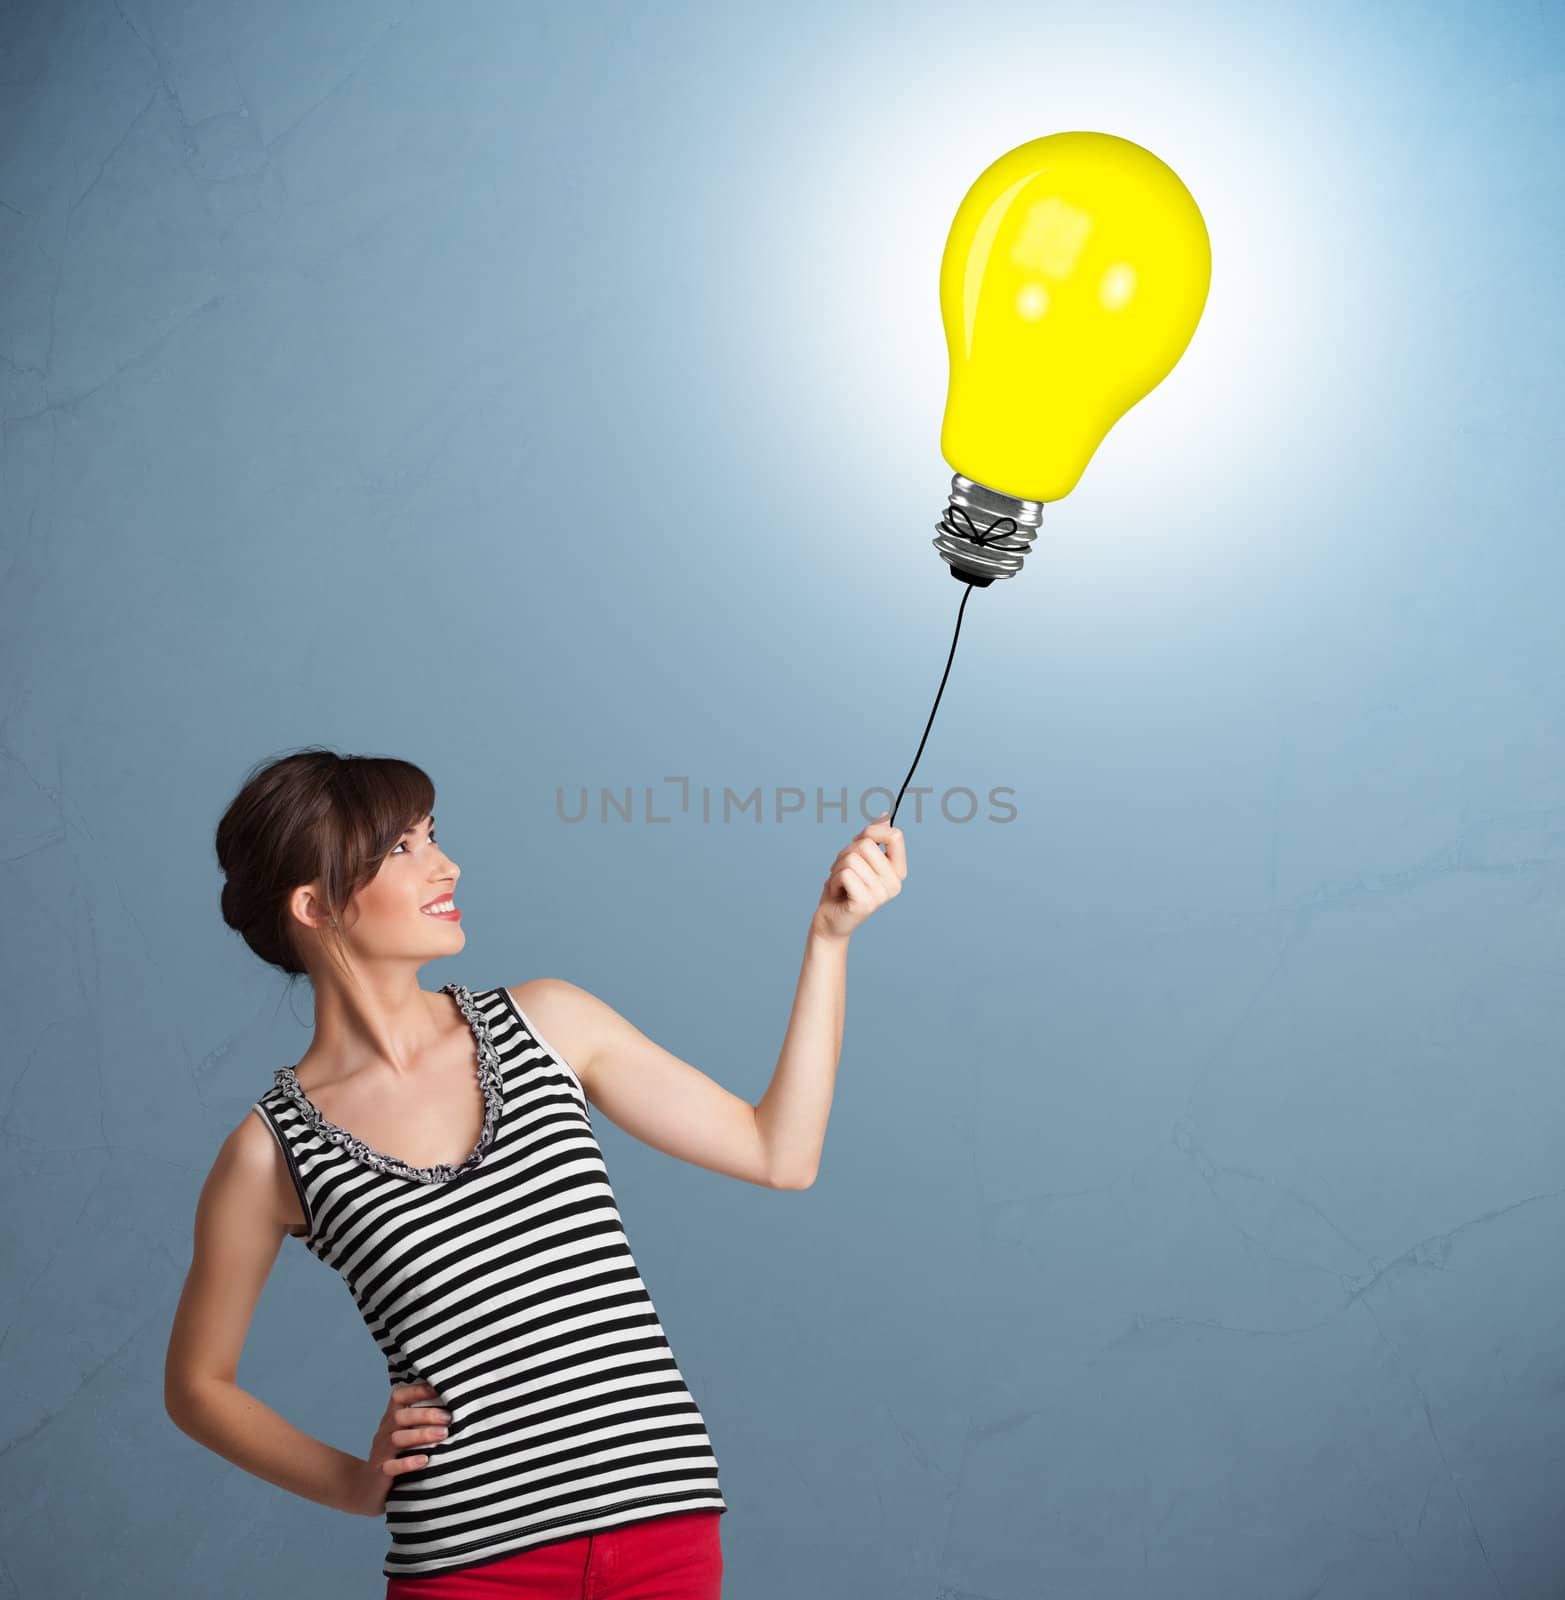 Pretty lady holding a light bulb balloon by ra2studio